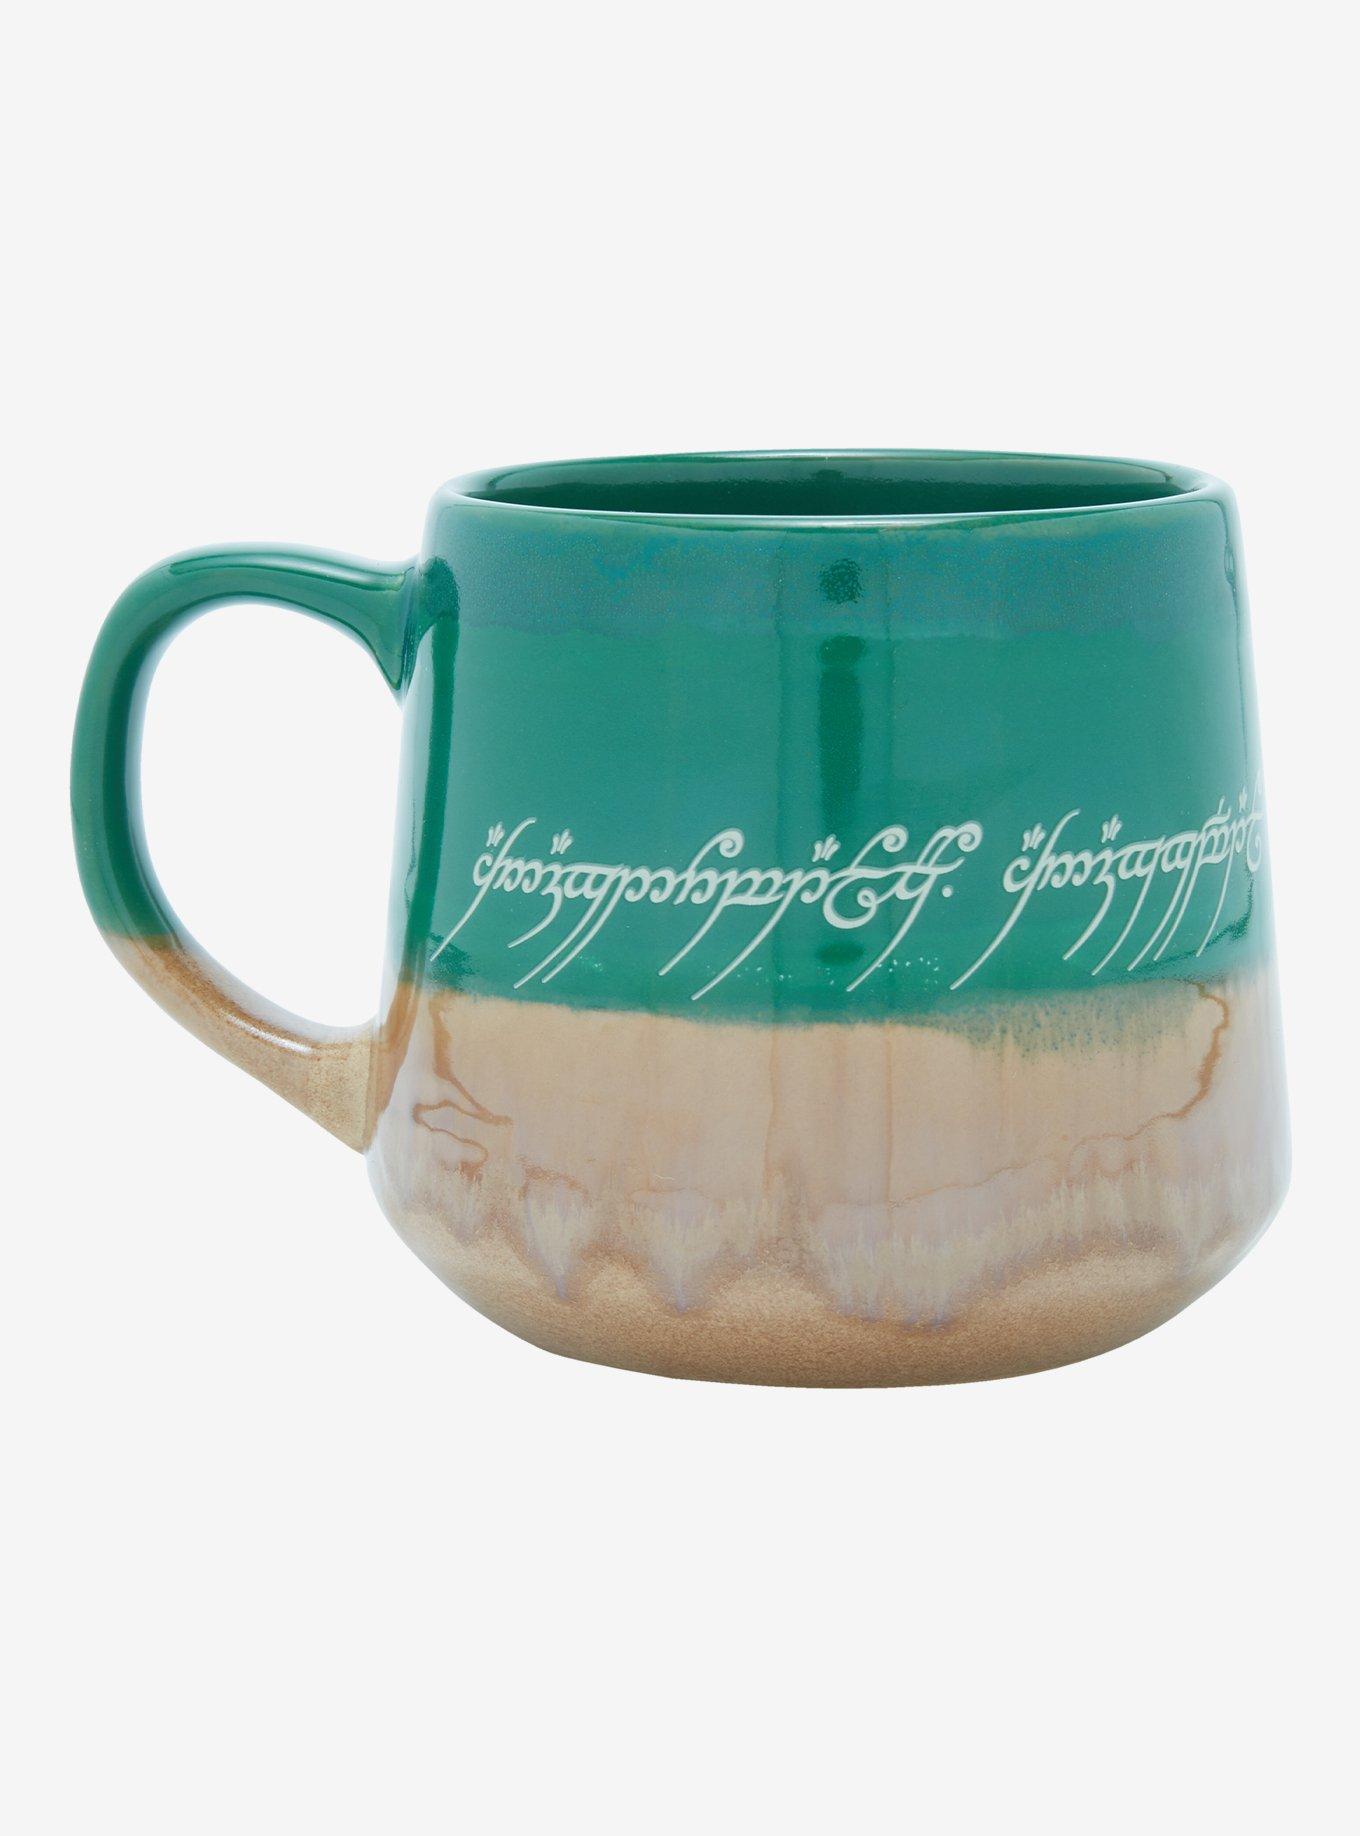 Pixxa Hobbit Mug Cup - Milk Coffee Tea Cup Porcelain Gift (Lord of